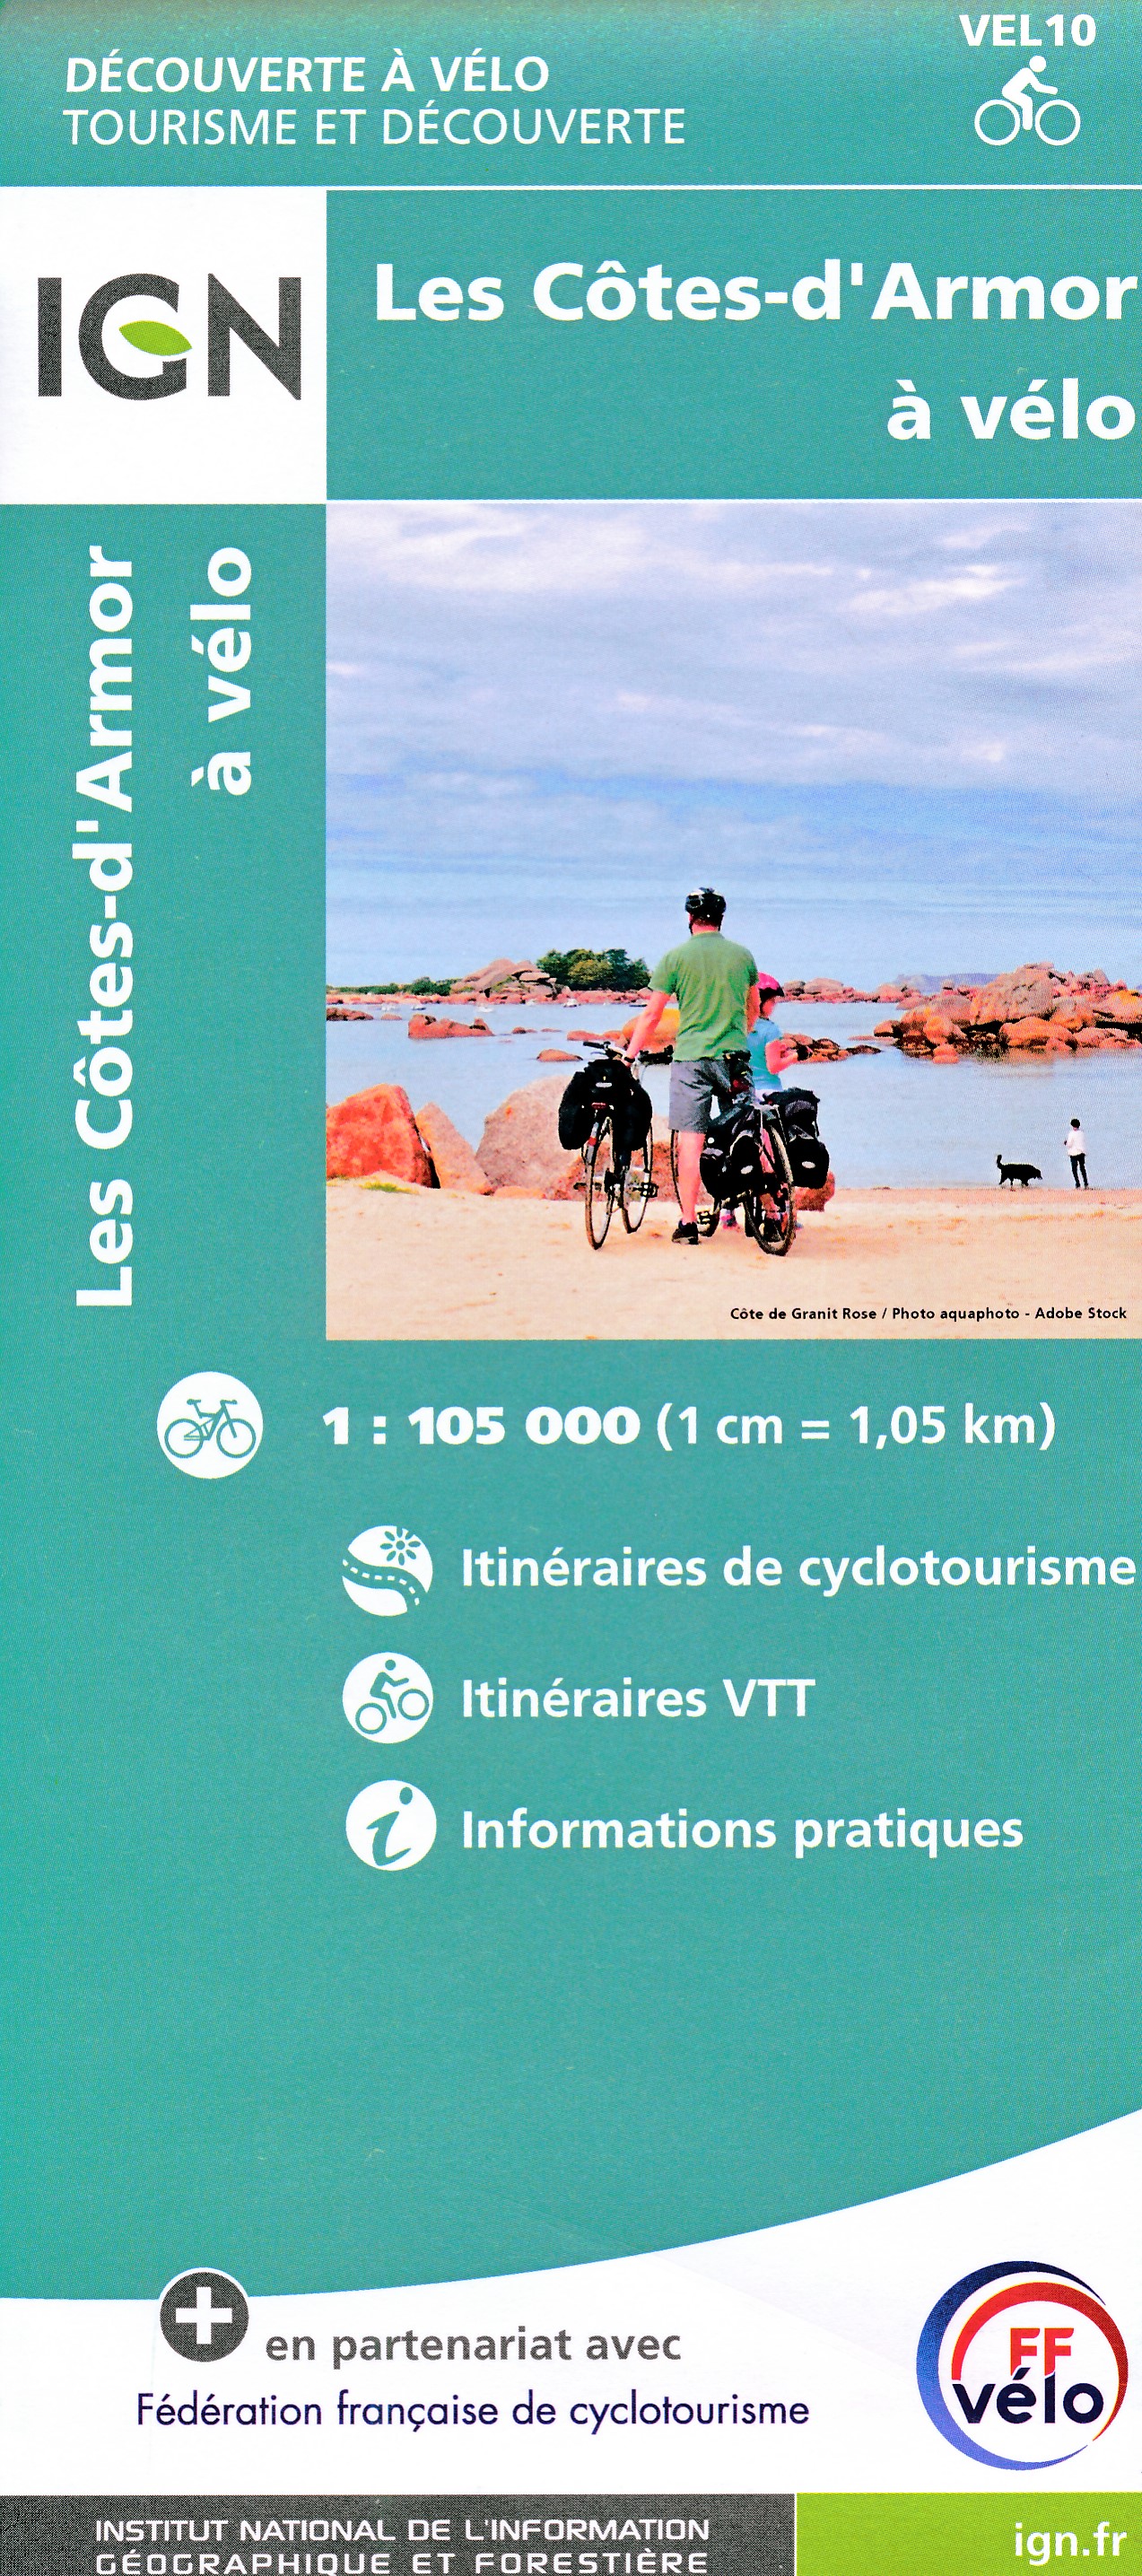 Online bestellen: Fietskaart 10 Velo Cotes-d'Armor a velo - by bike | IGN - Institut Géographique National